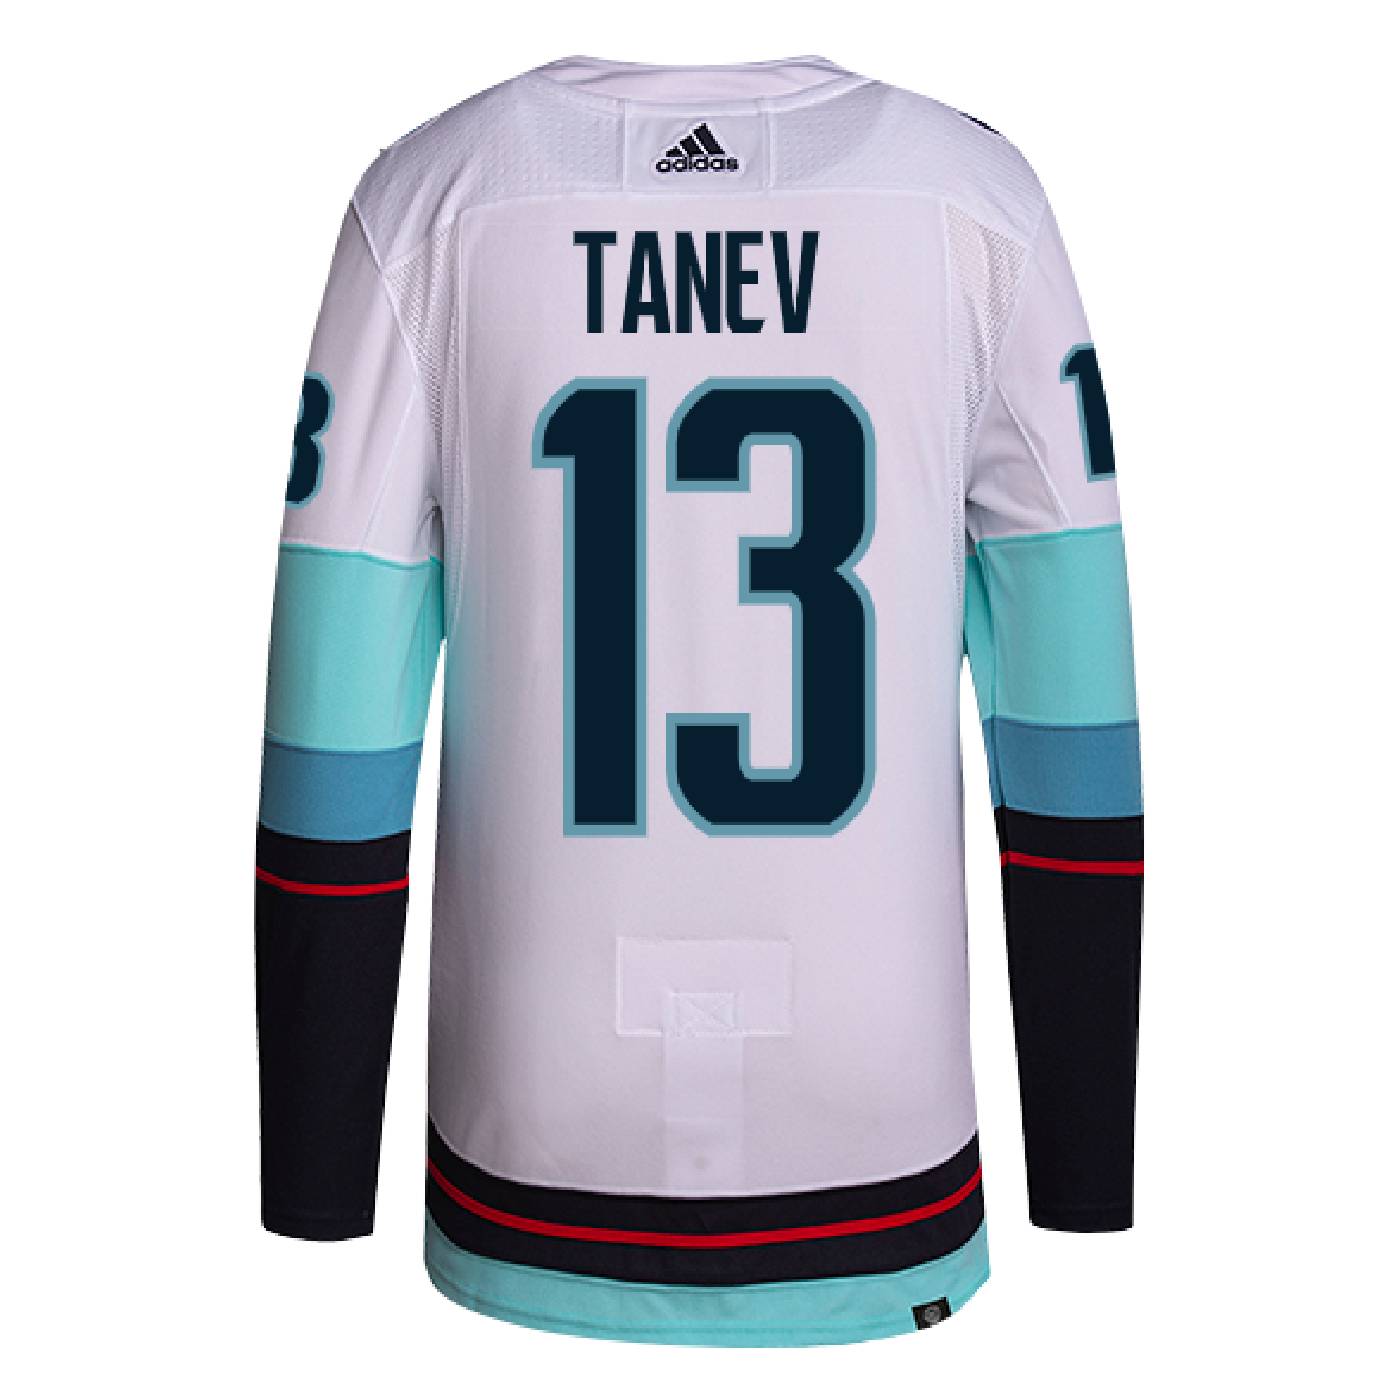 Buy the NHL Men Kraken #13 Tanev Jersey Sz 2XL